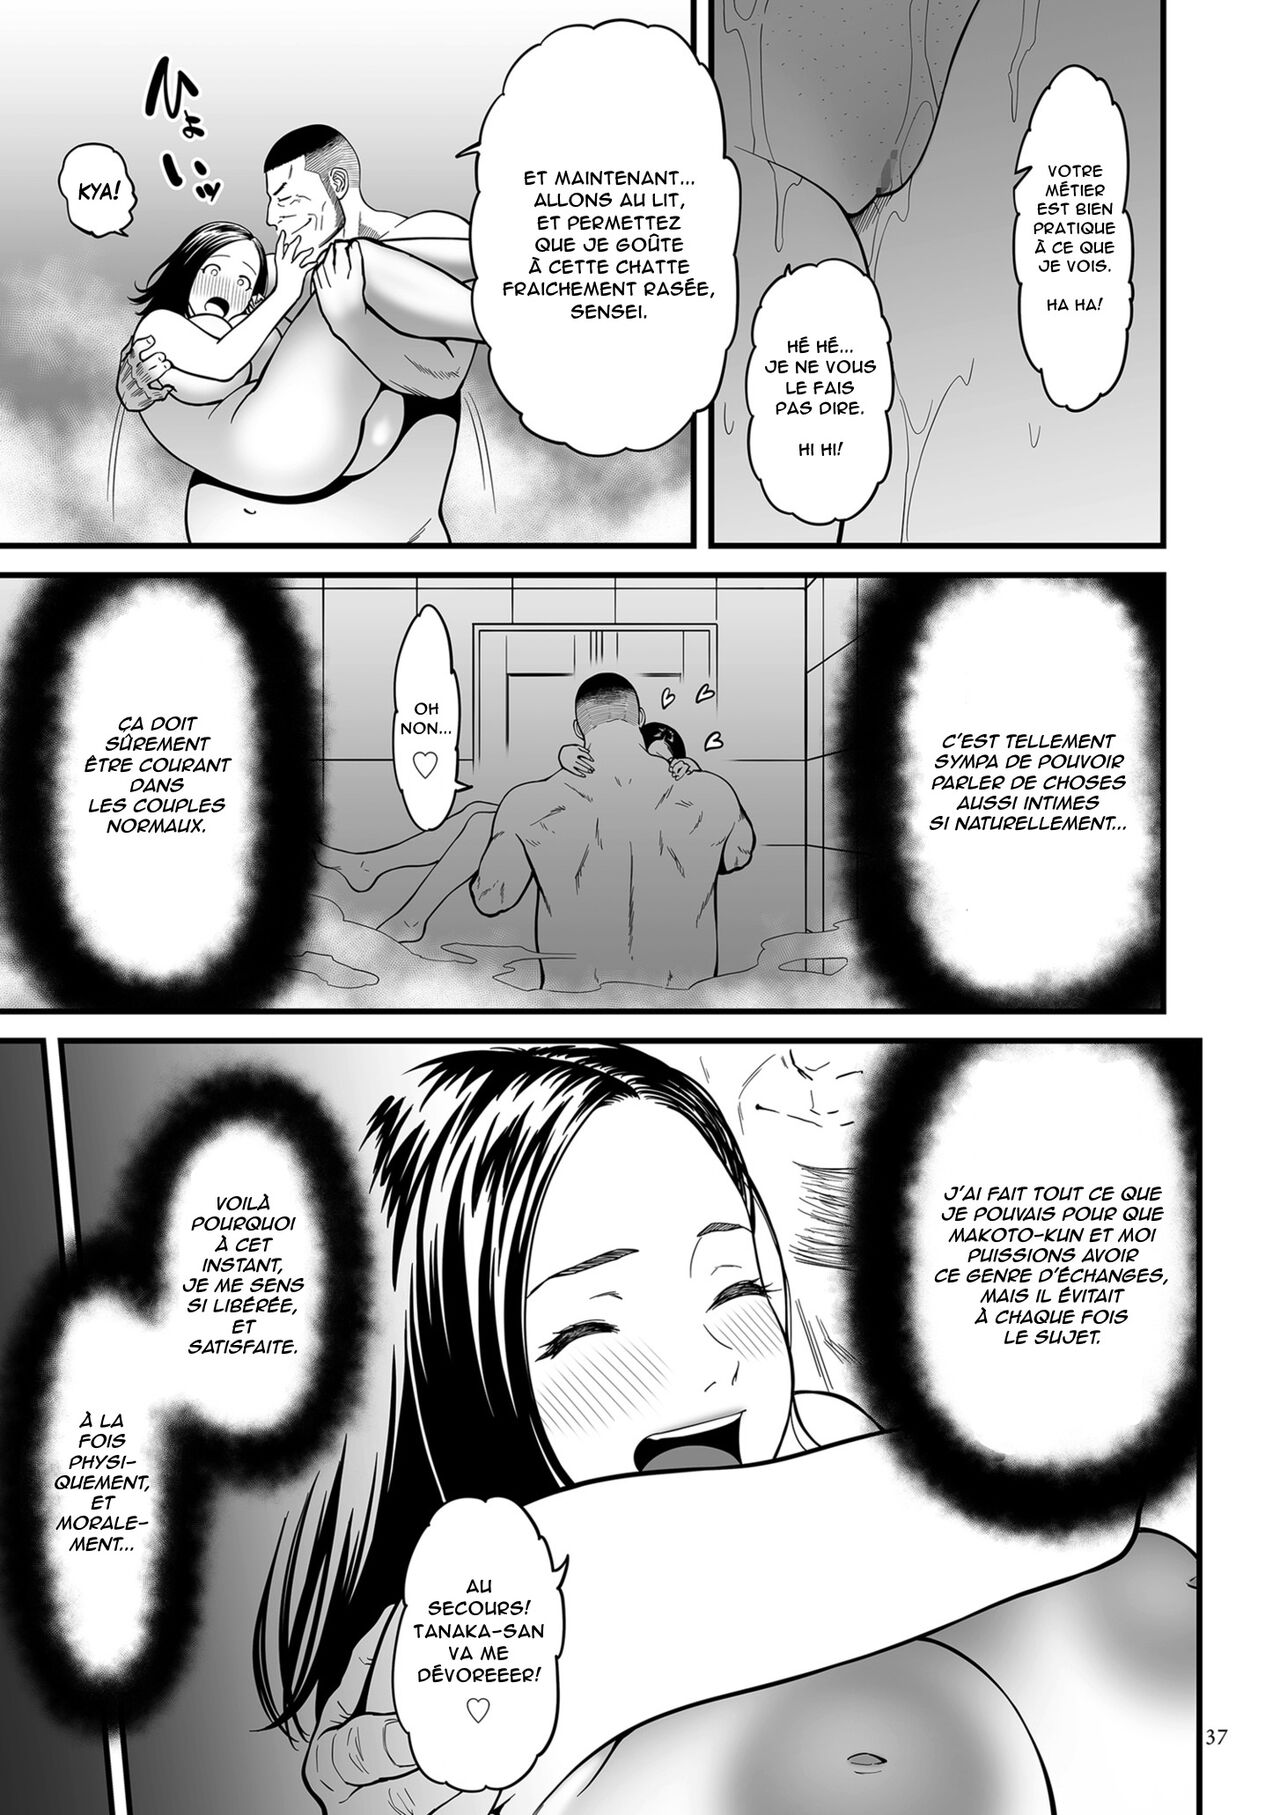 Onna Eromangaka ga Inran da nante Gensou ja nai?  Is It Not a Fantasy That The Female Erotic Mangaka Is a Pervert? numero d'image 37